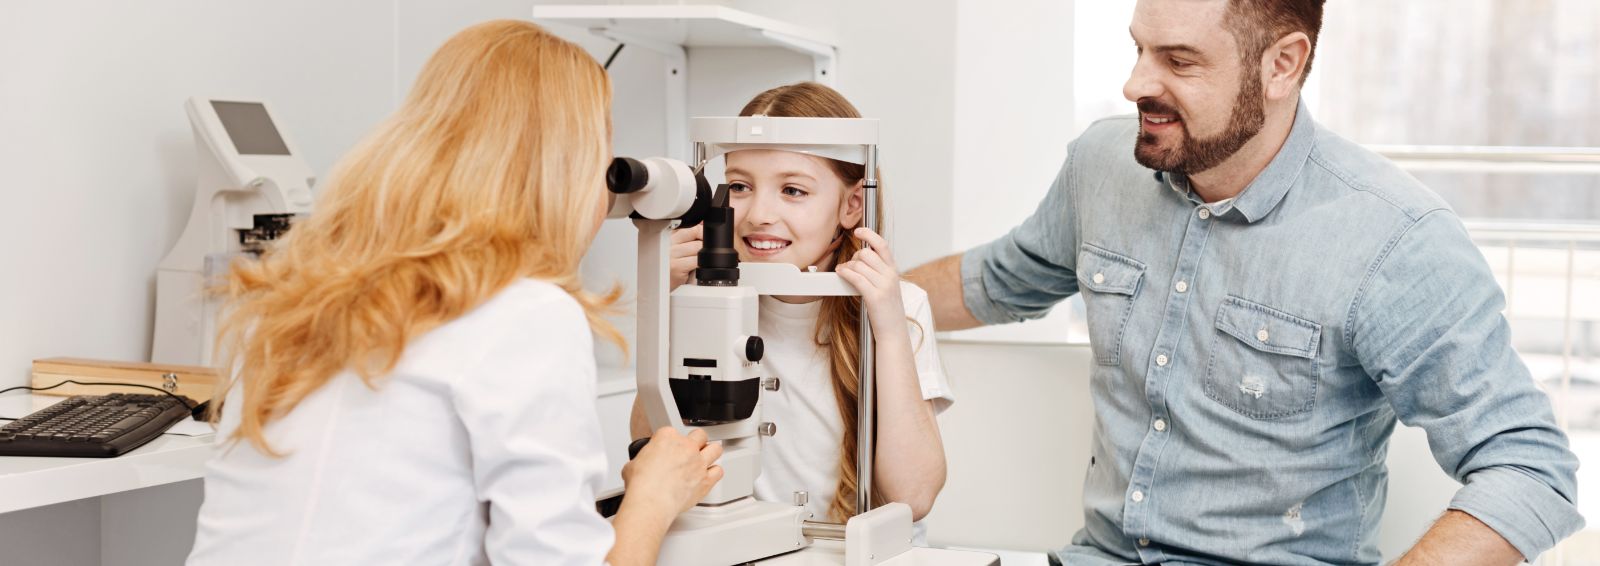 girl getting an eye exam